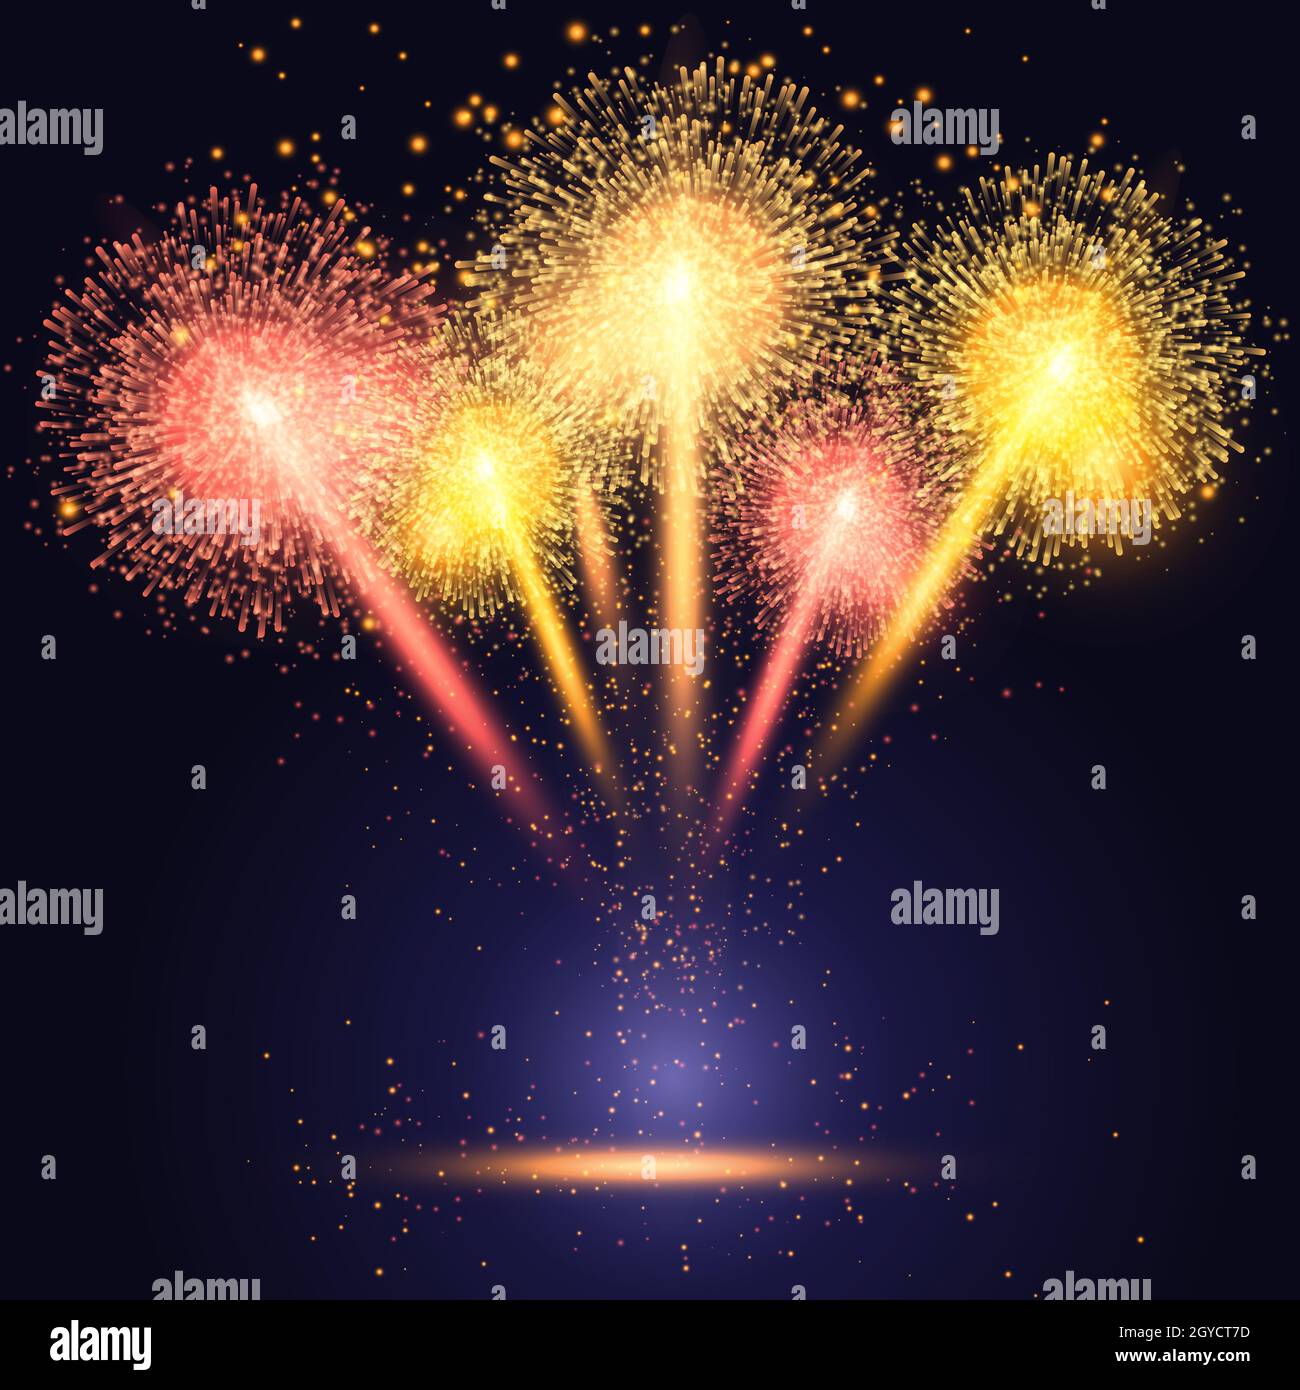 Celebration background with colourful fireworks Stock Photo